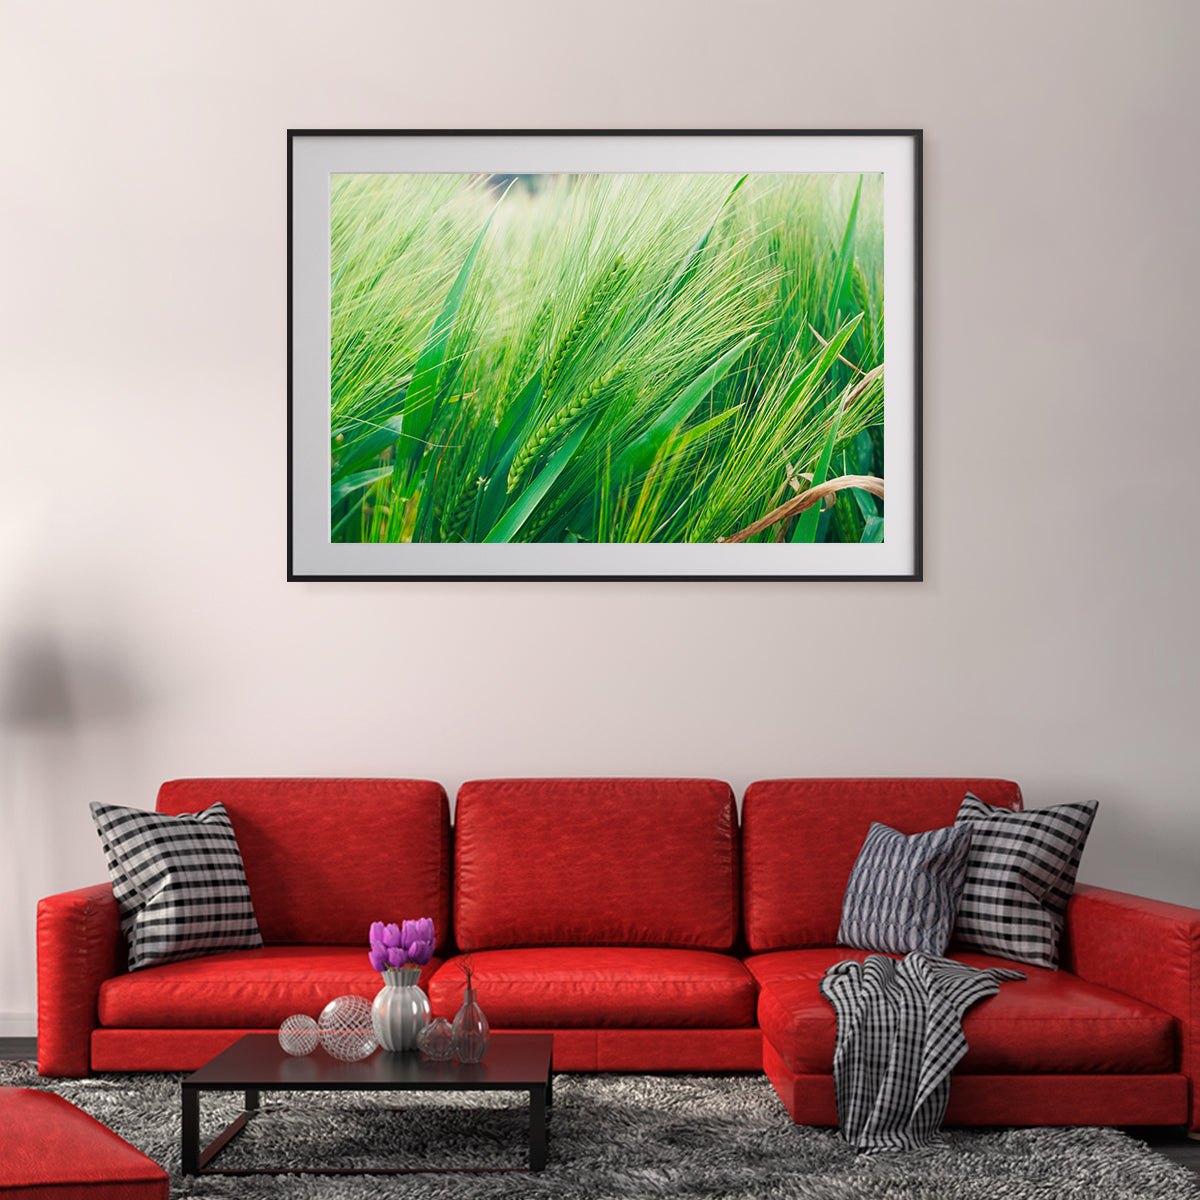 Fresh Green Barley Posters Prints Botanical Wall Art-Horizontal Posters NOT FRAMED-CetArt-10″x8″ inches-CetArt